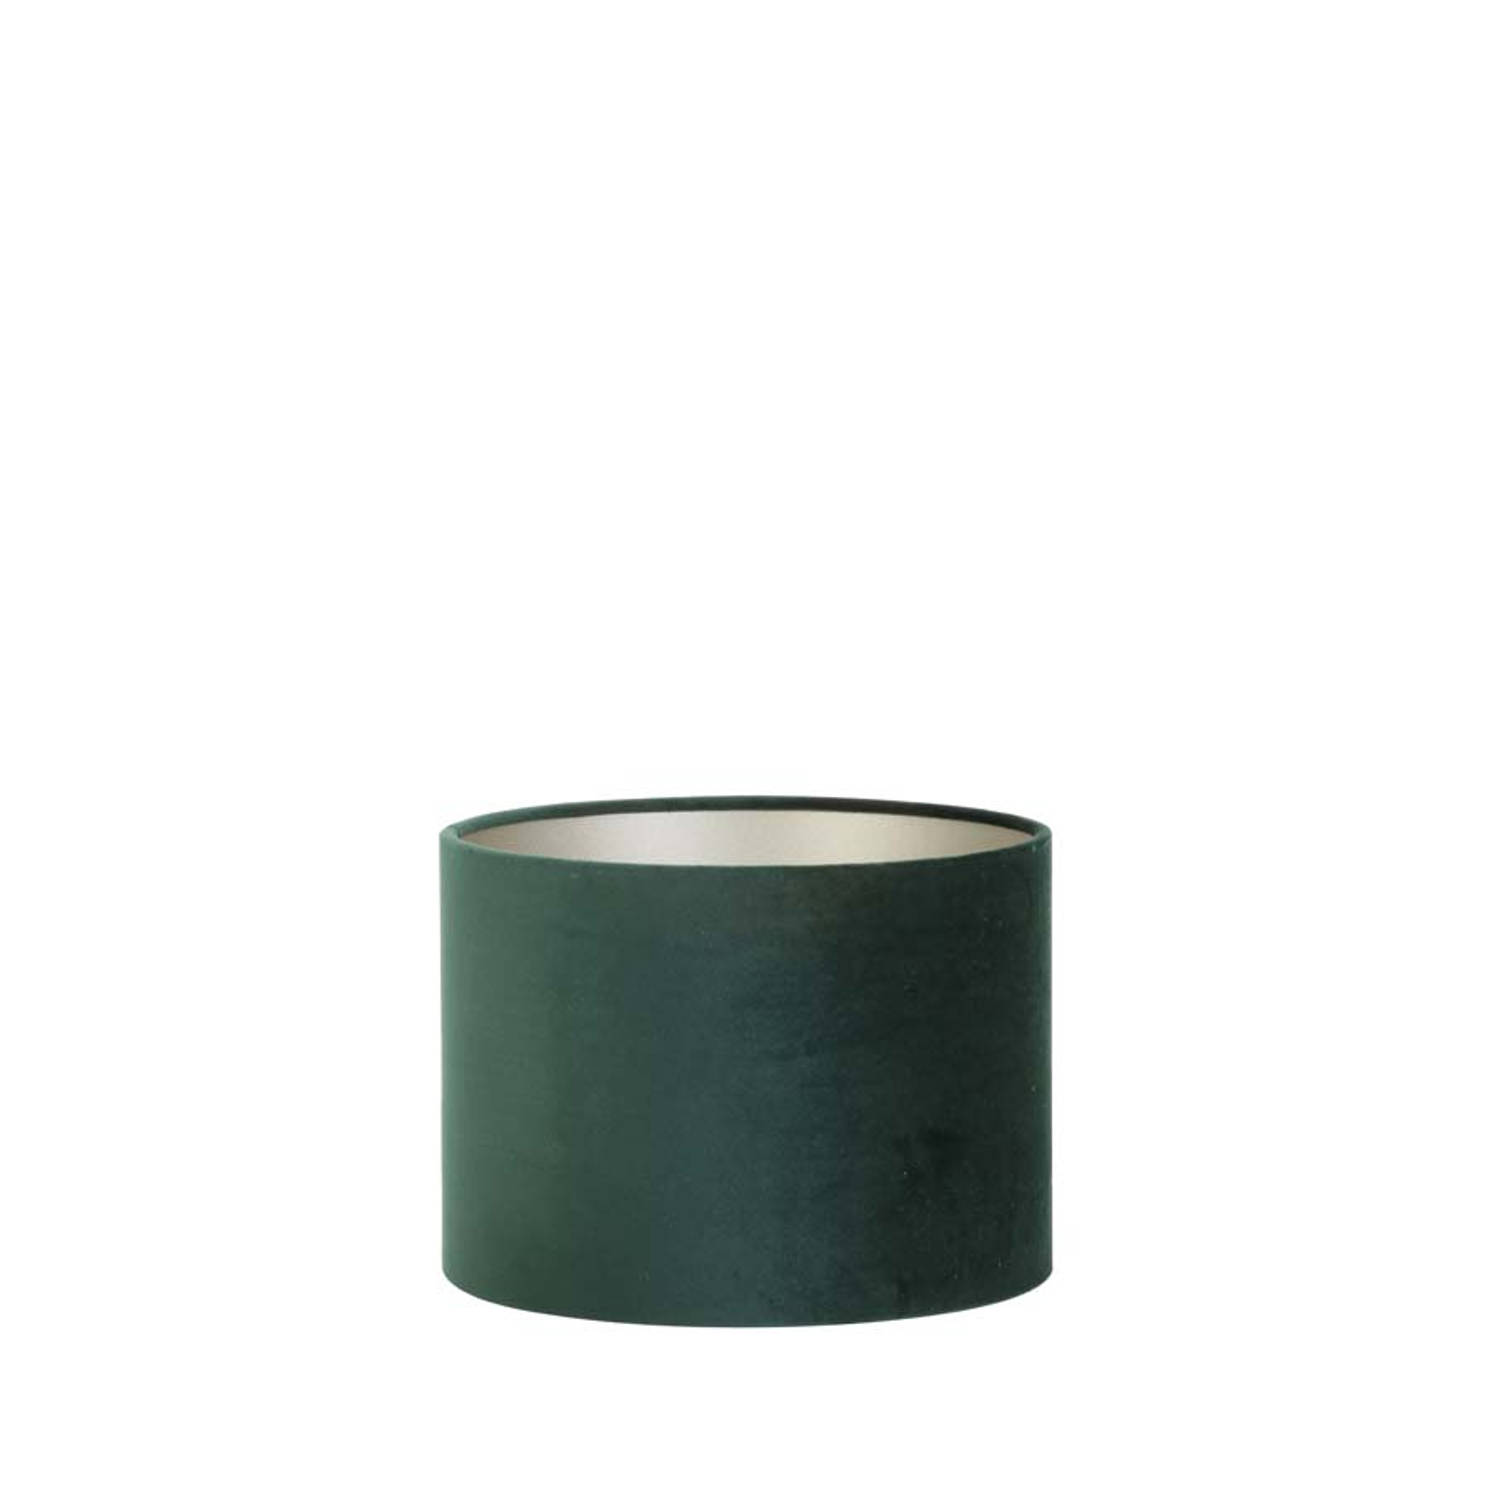 Kap cilinder 20-20-15 cm VELOURS dutch green Light & Living